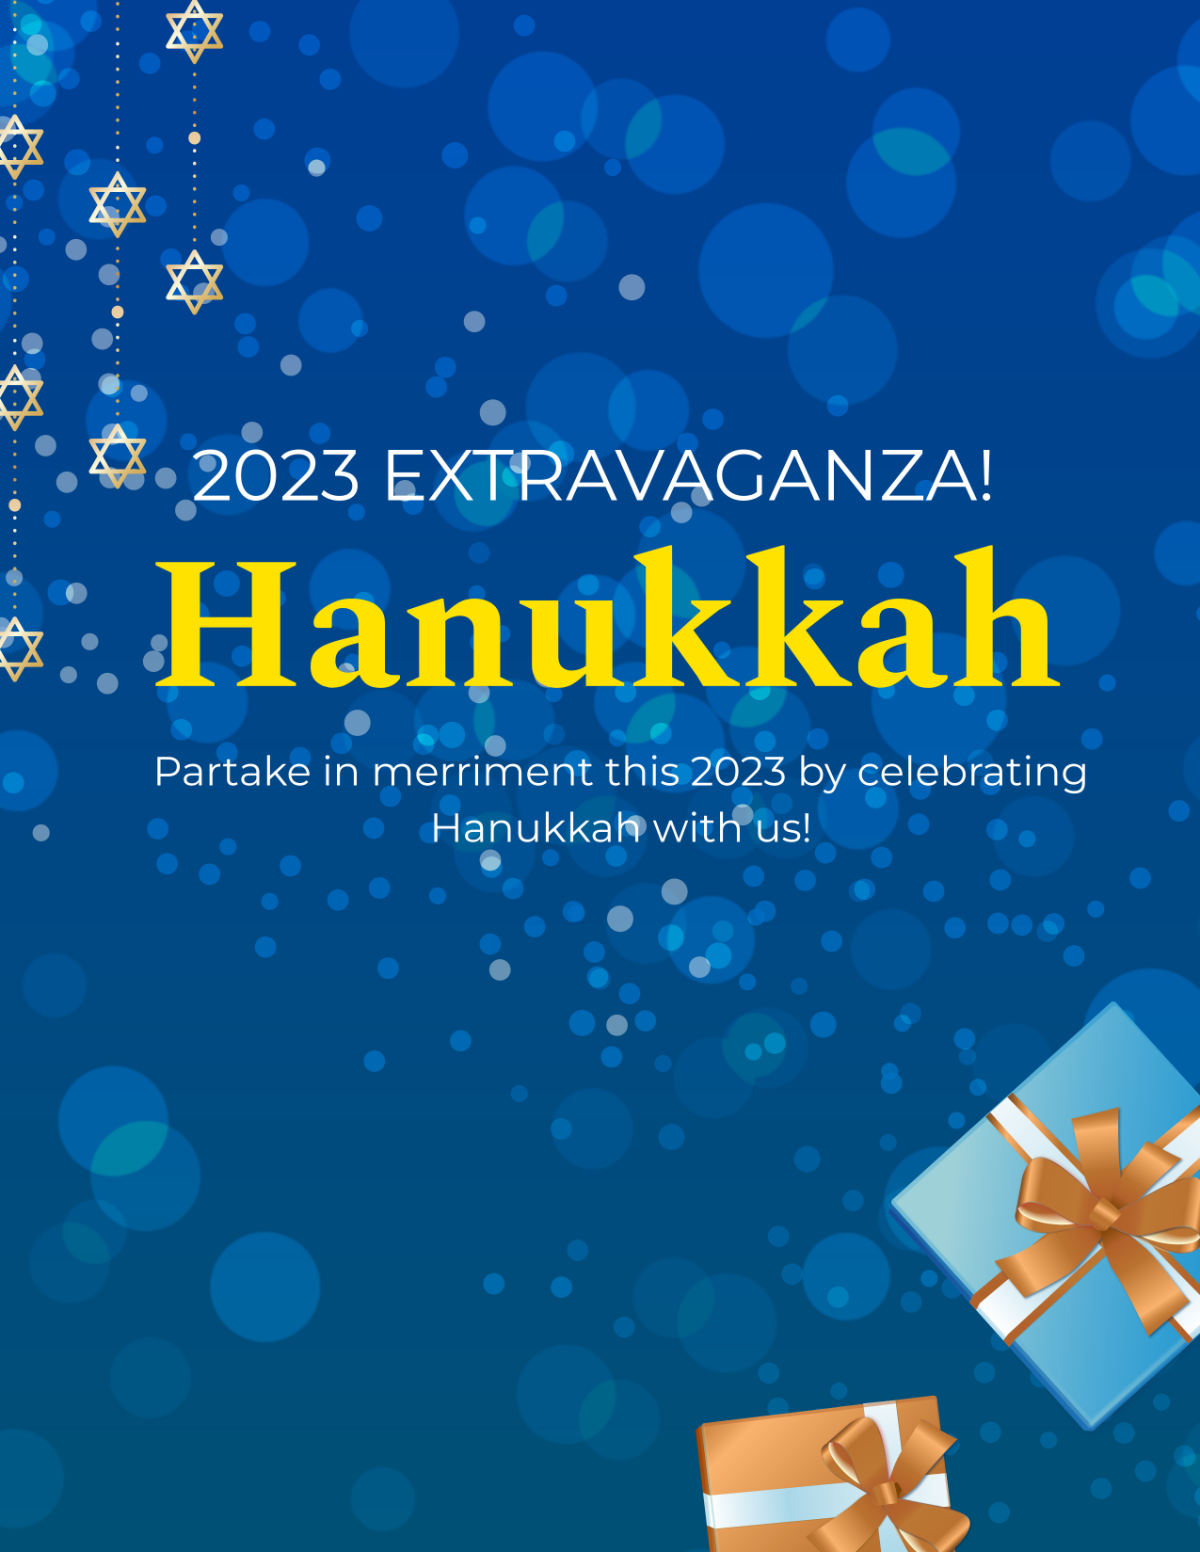 Free Hanukkah 2023 Flyer Template